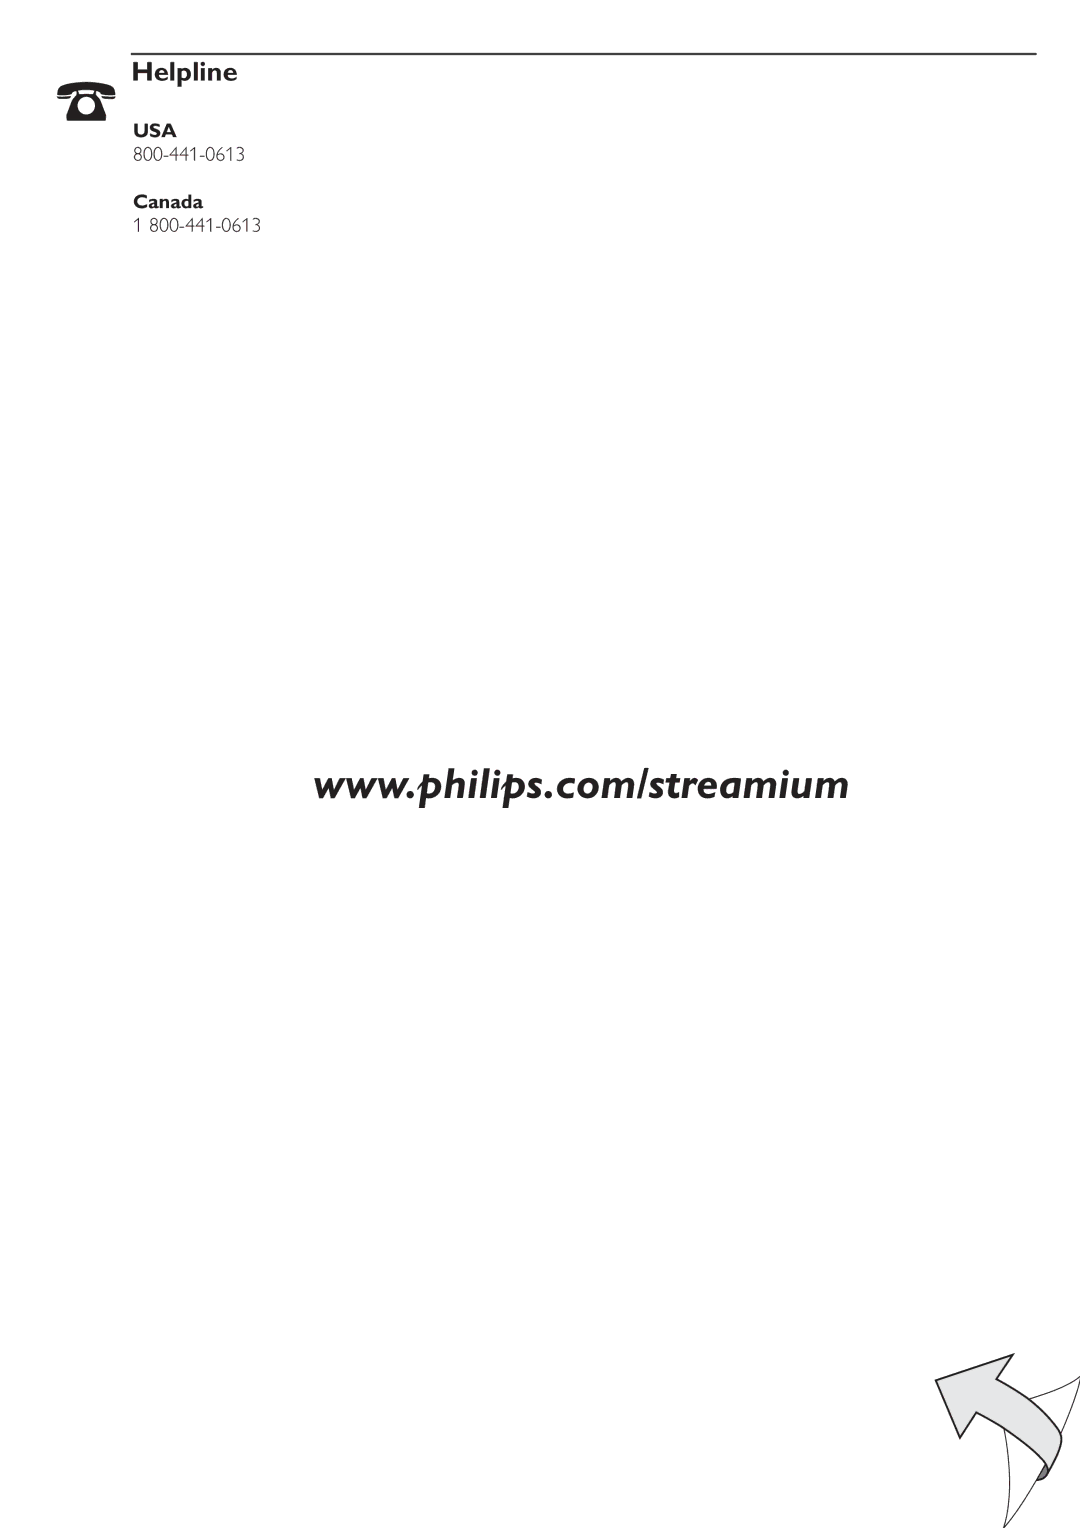 Philips SL300i manual HelplineUSA 